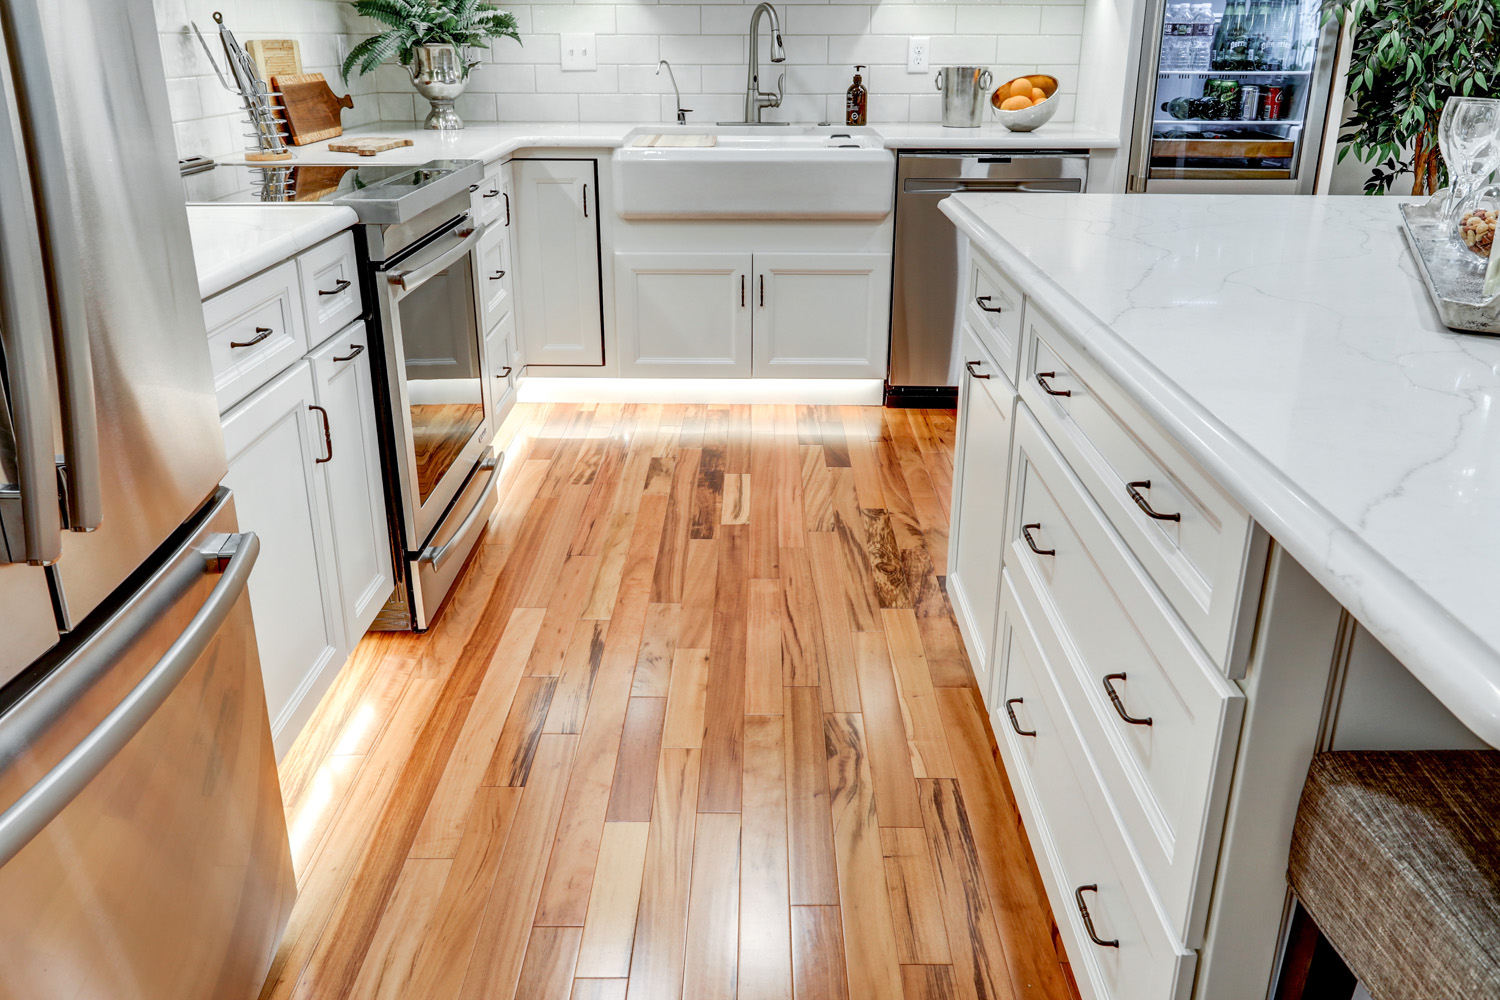 Leola kitchen remodel with toe kick lighting and hardwood floor